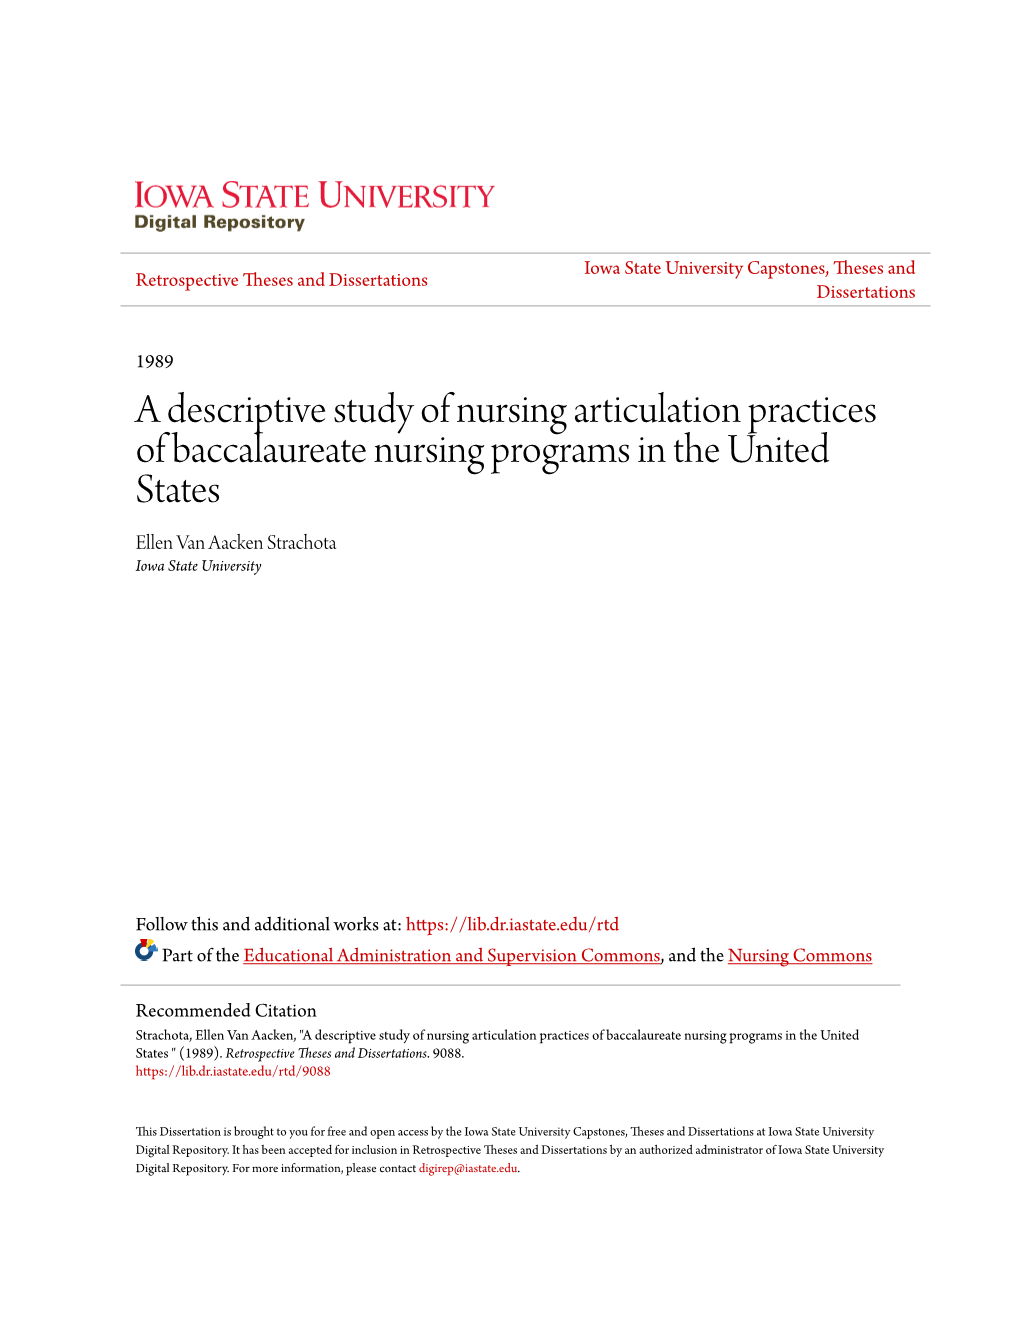 A Descriptive Study of Nursing Articulation Practices of Baccalaureate Nursing Programs in the United States Ellen Van Aacken Strachota Iowa State University